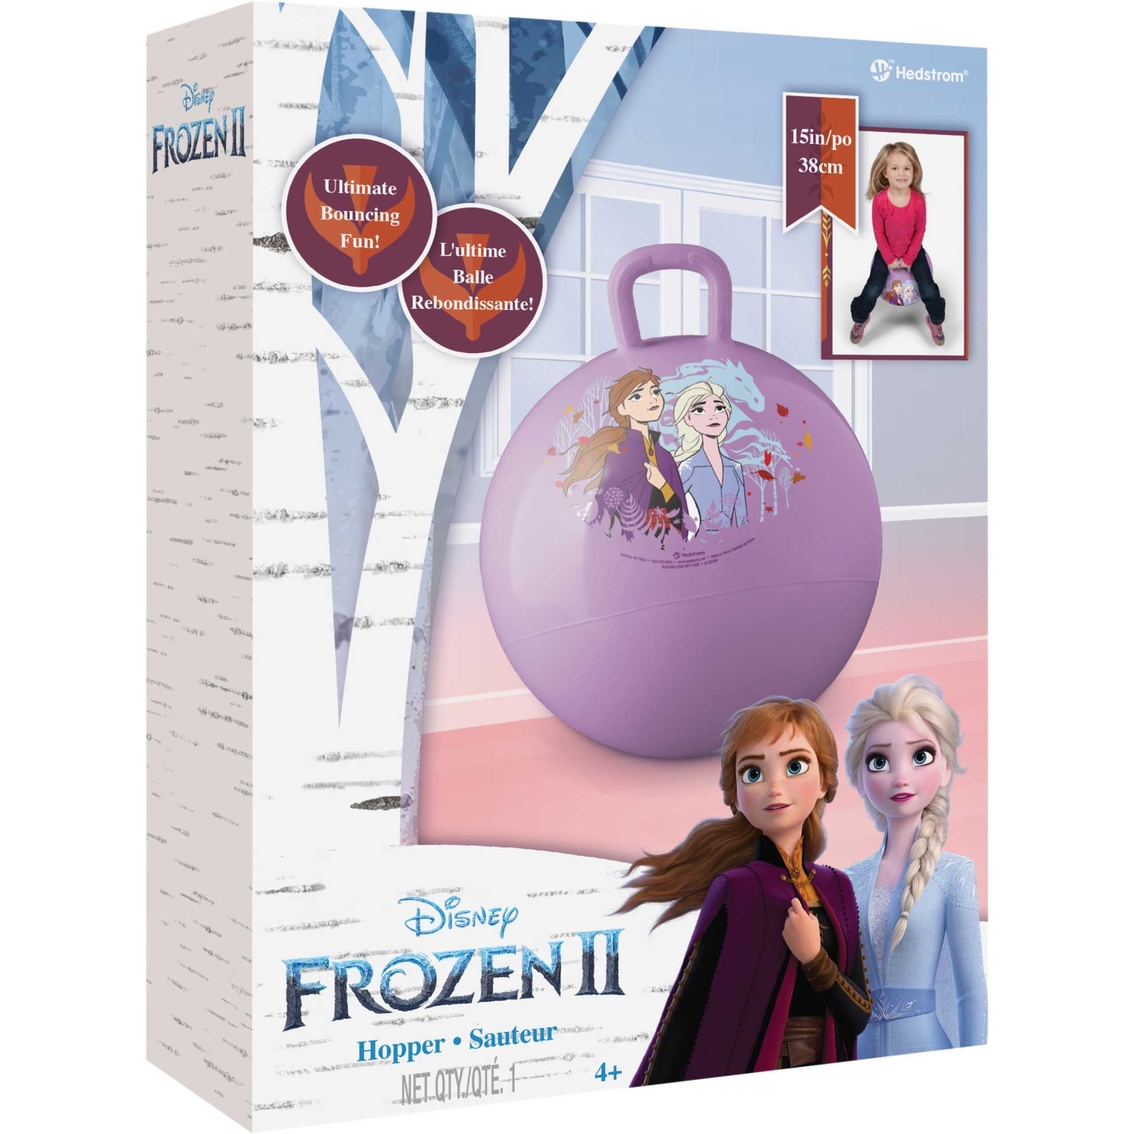 Hedstrom Disney Frozen 2 15 in. Hopper - Image 2 of 2